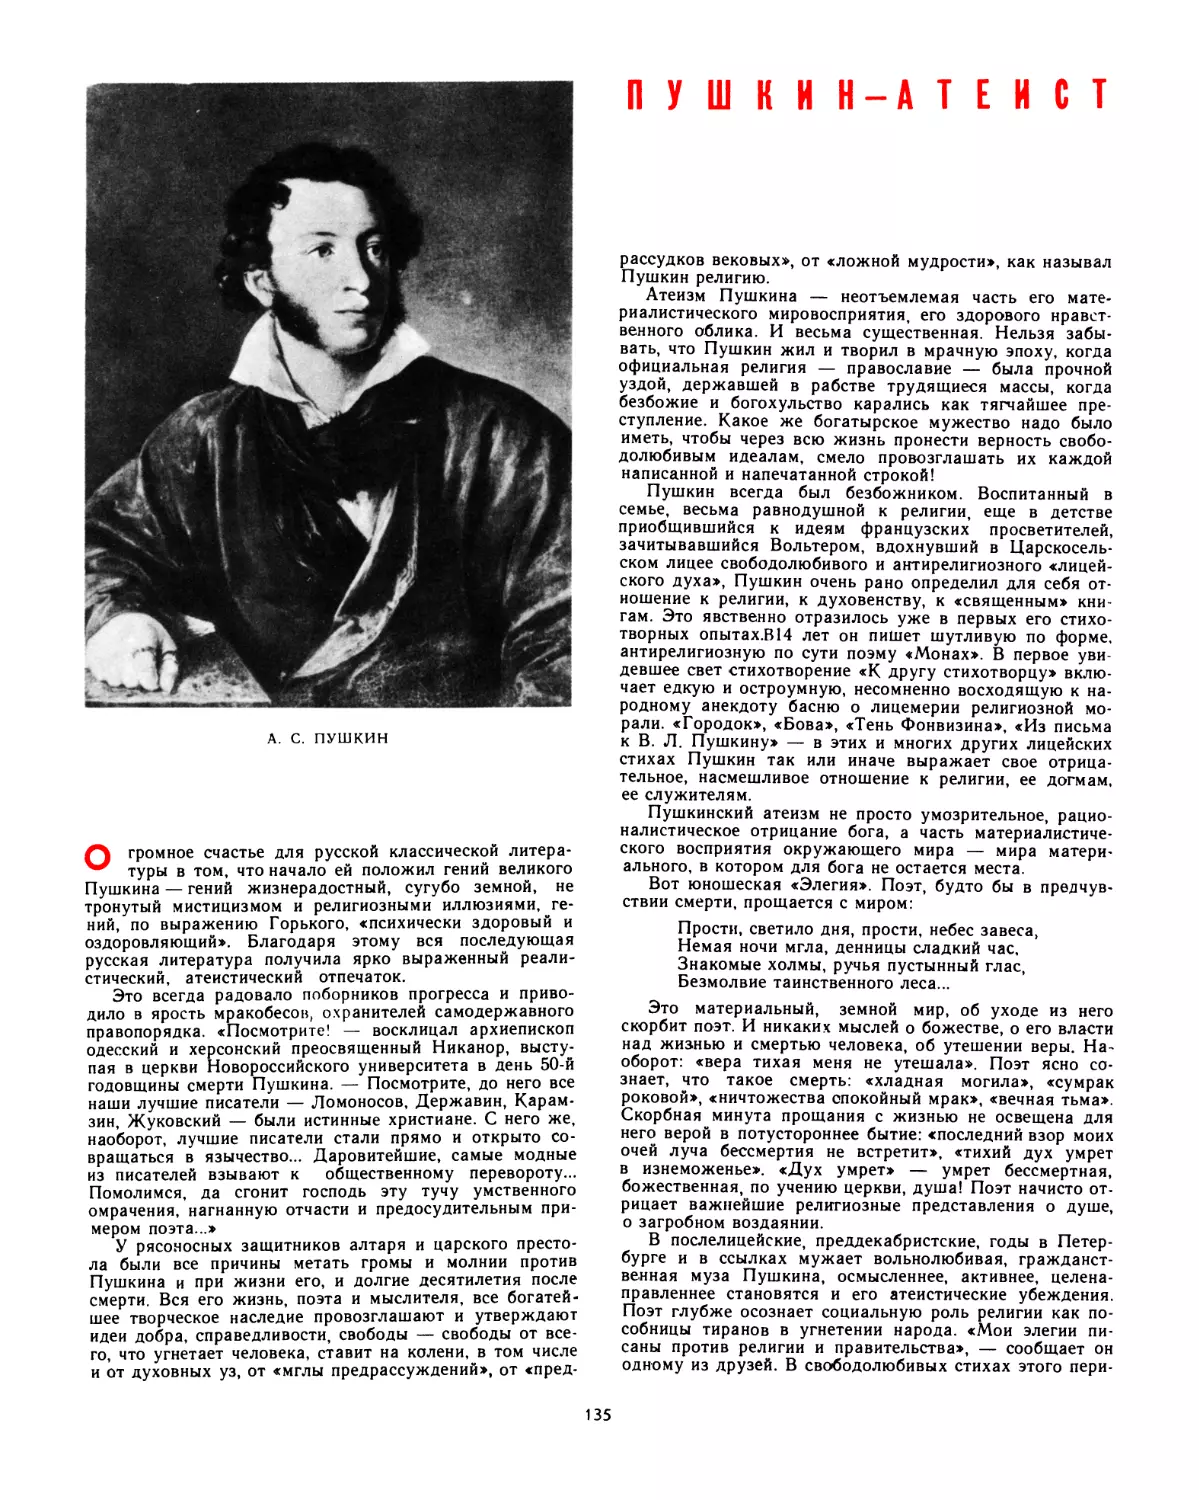 Пушкин — атеист